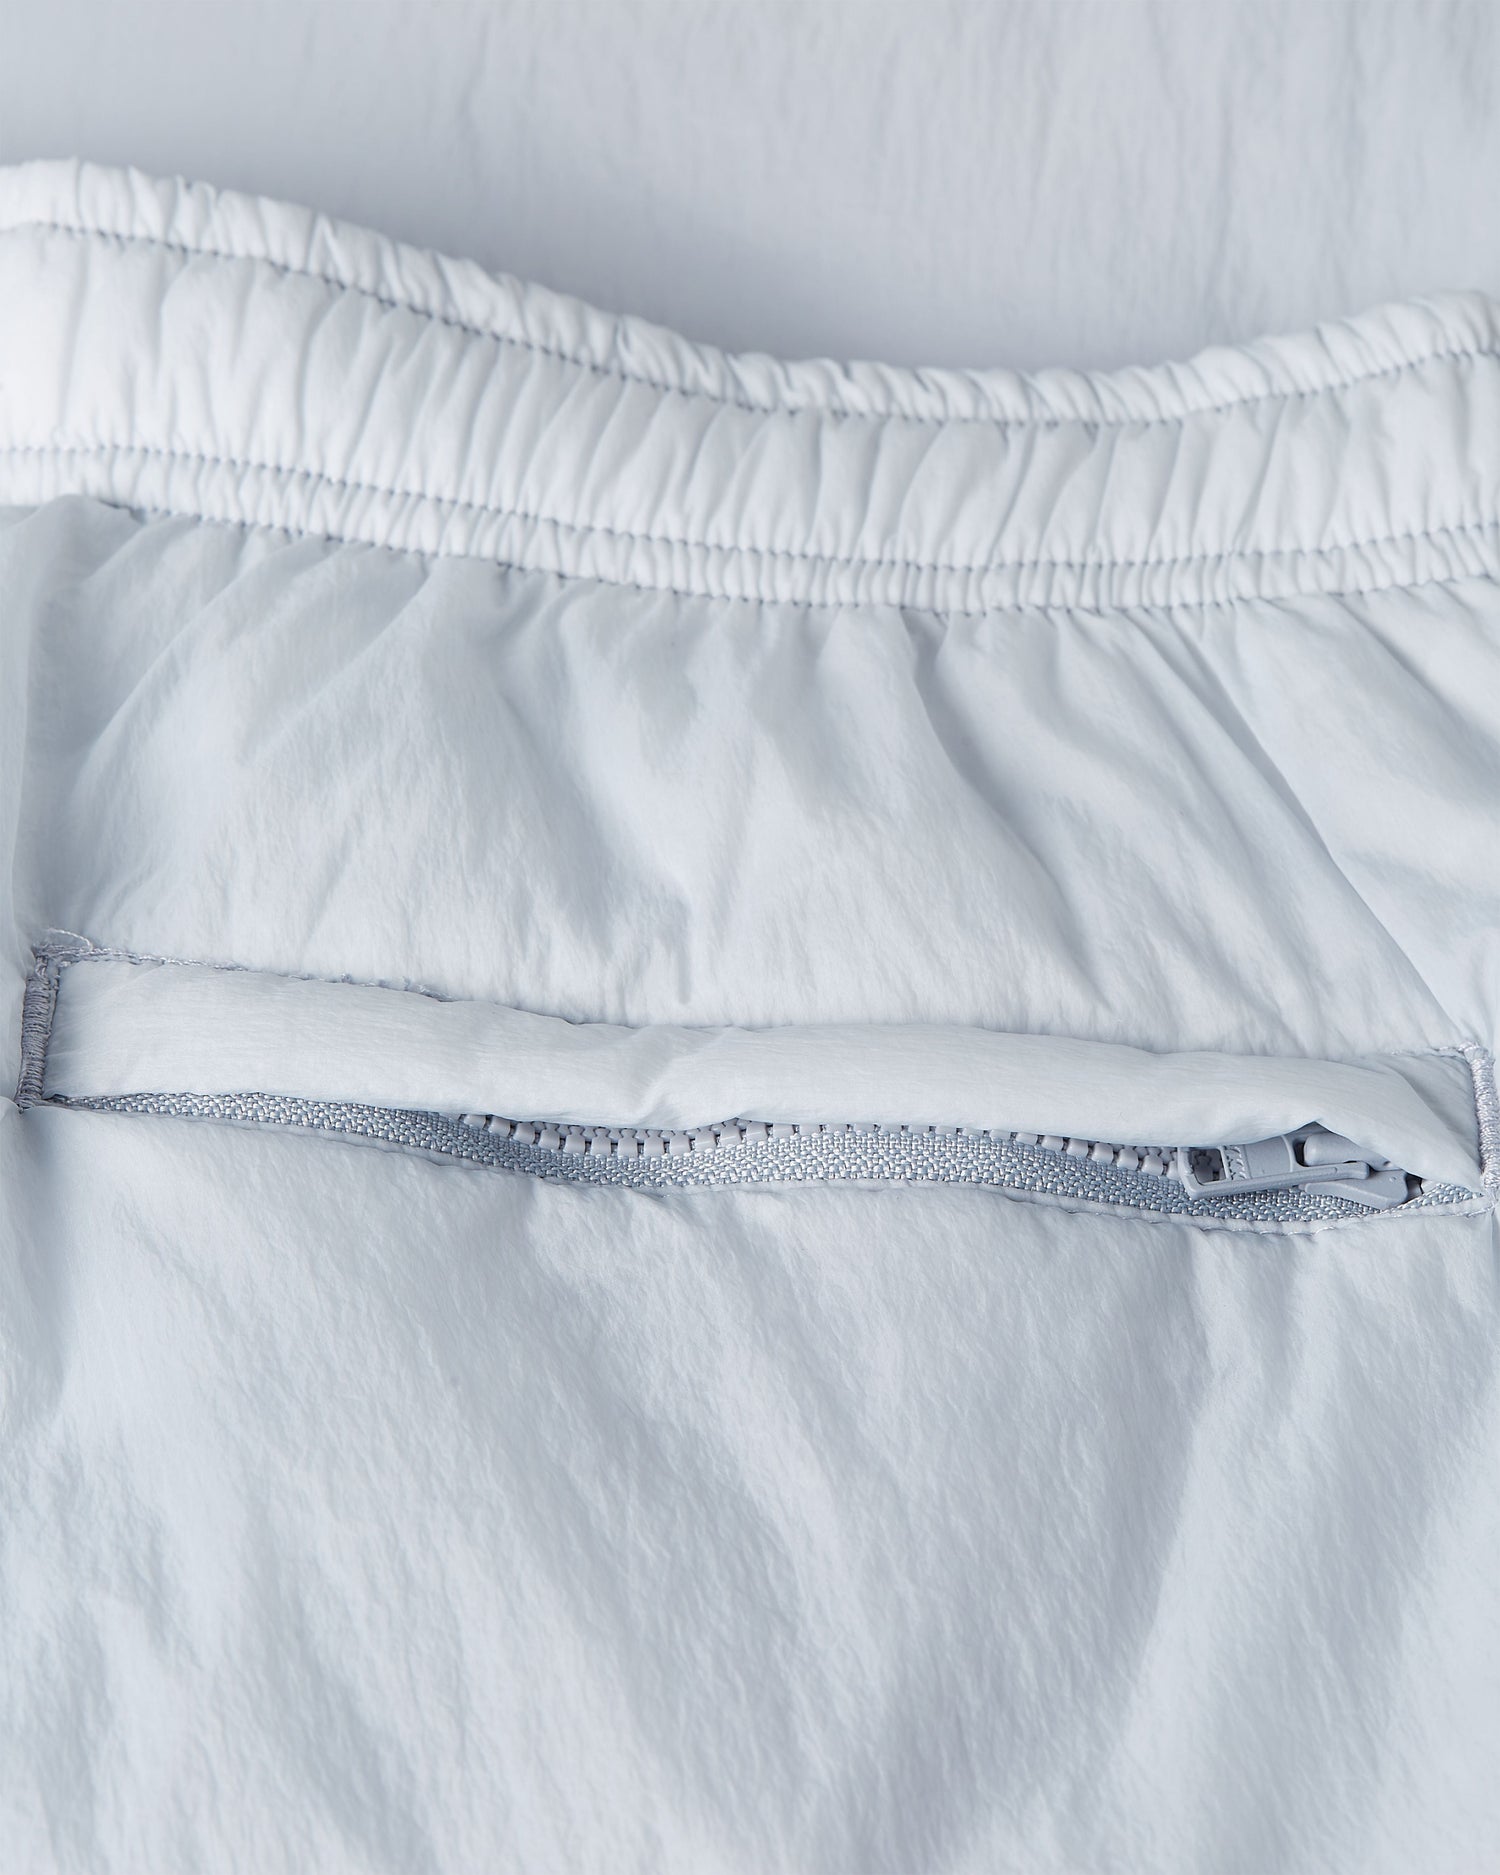 Patta Insulated Nylon Pants (Gray Dawn)